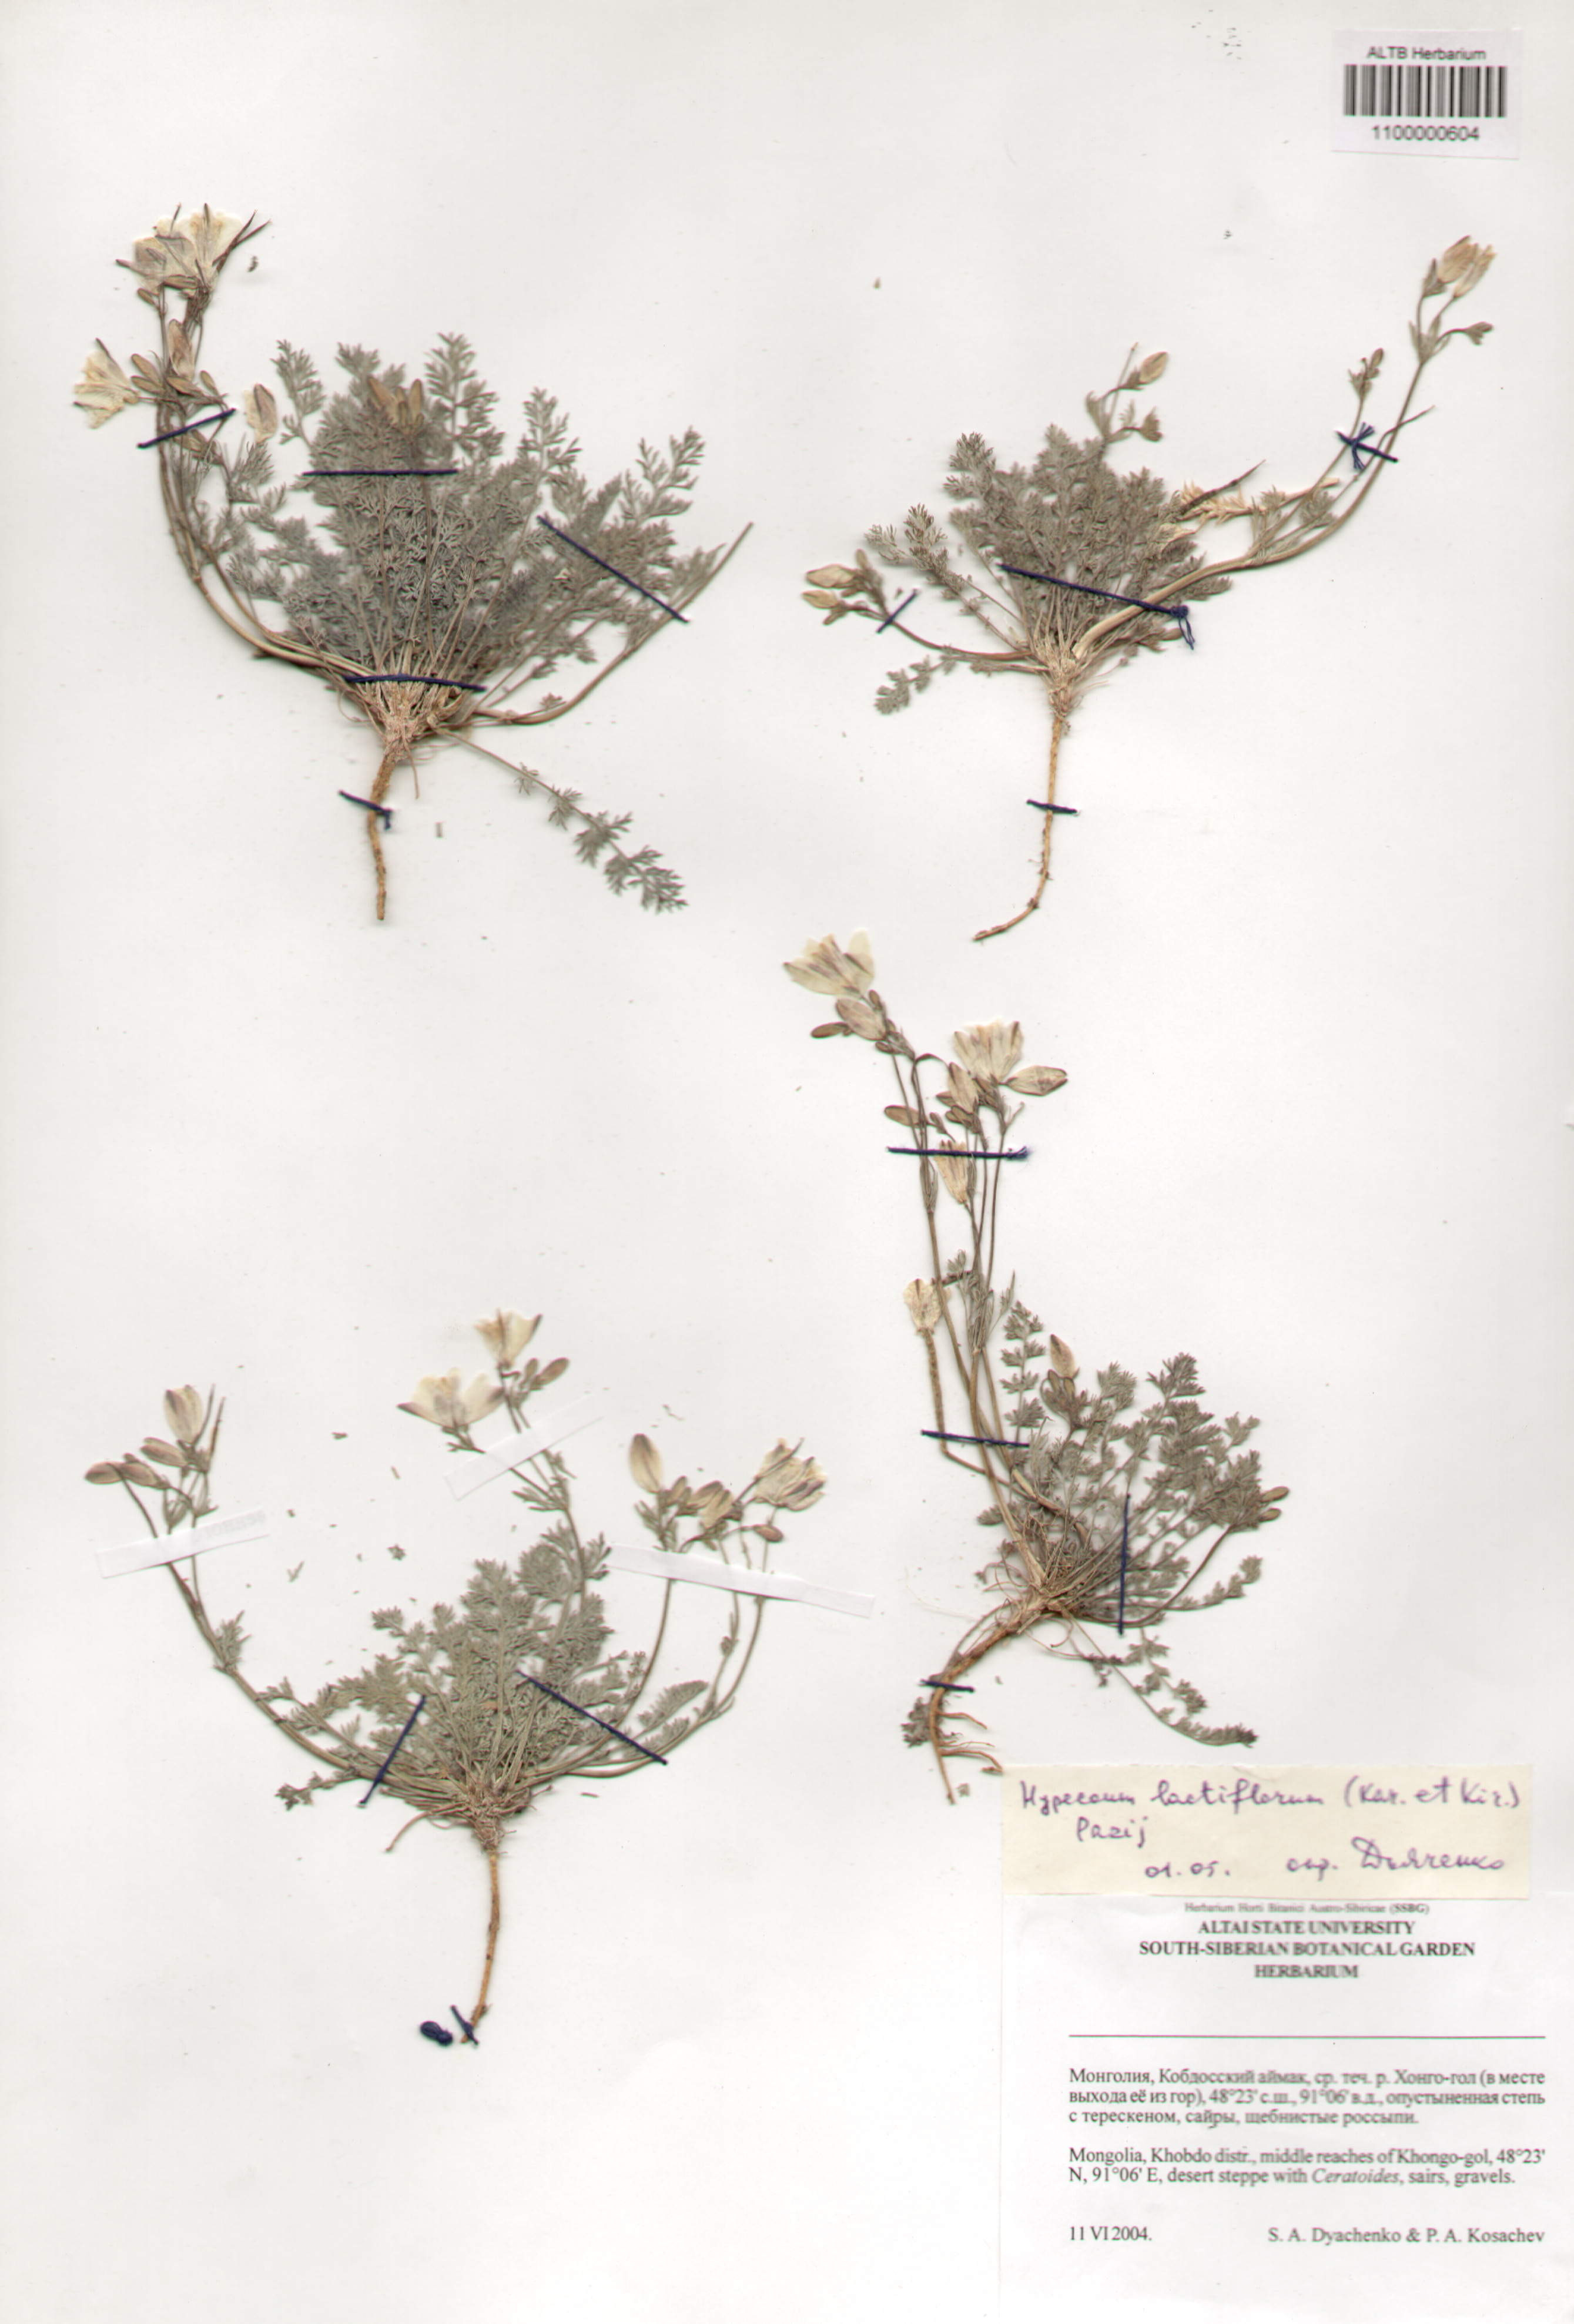 Hypocoaceae,Hypocoum lactiflorum (Kar. et Kir.) Pazij